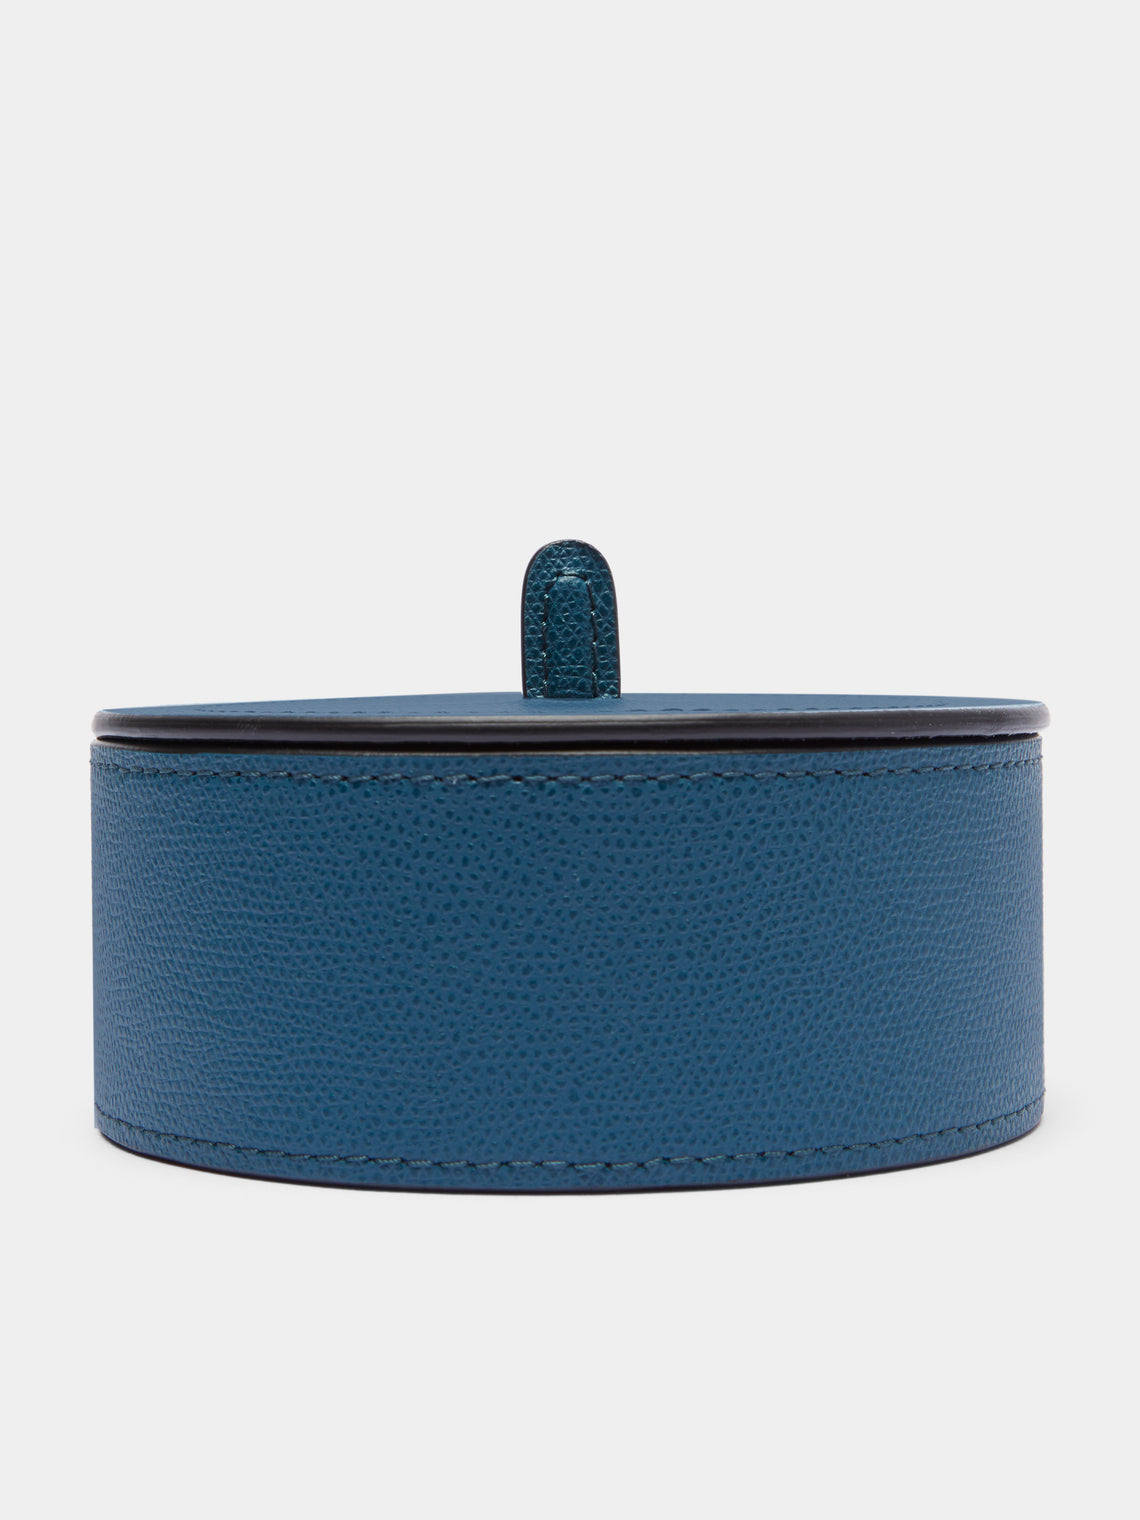 Giobagnara - Harris Leather Medium Trinket Box - Blue - ABASK